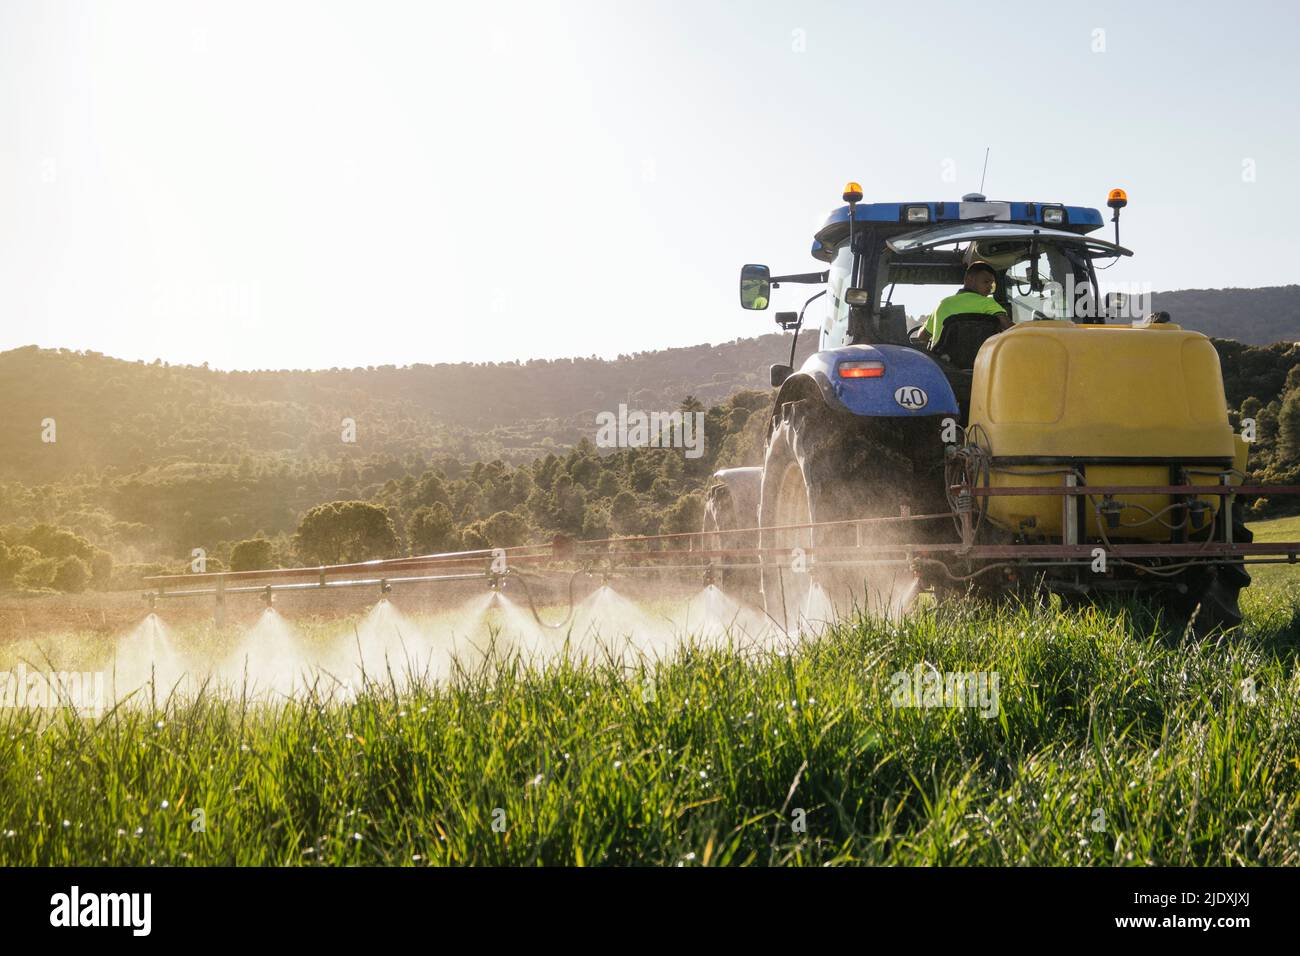 Young farmer spraying fertilizer through sprayer on tractor on field Stock Photo